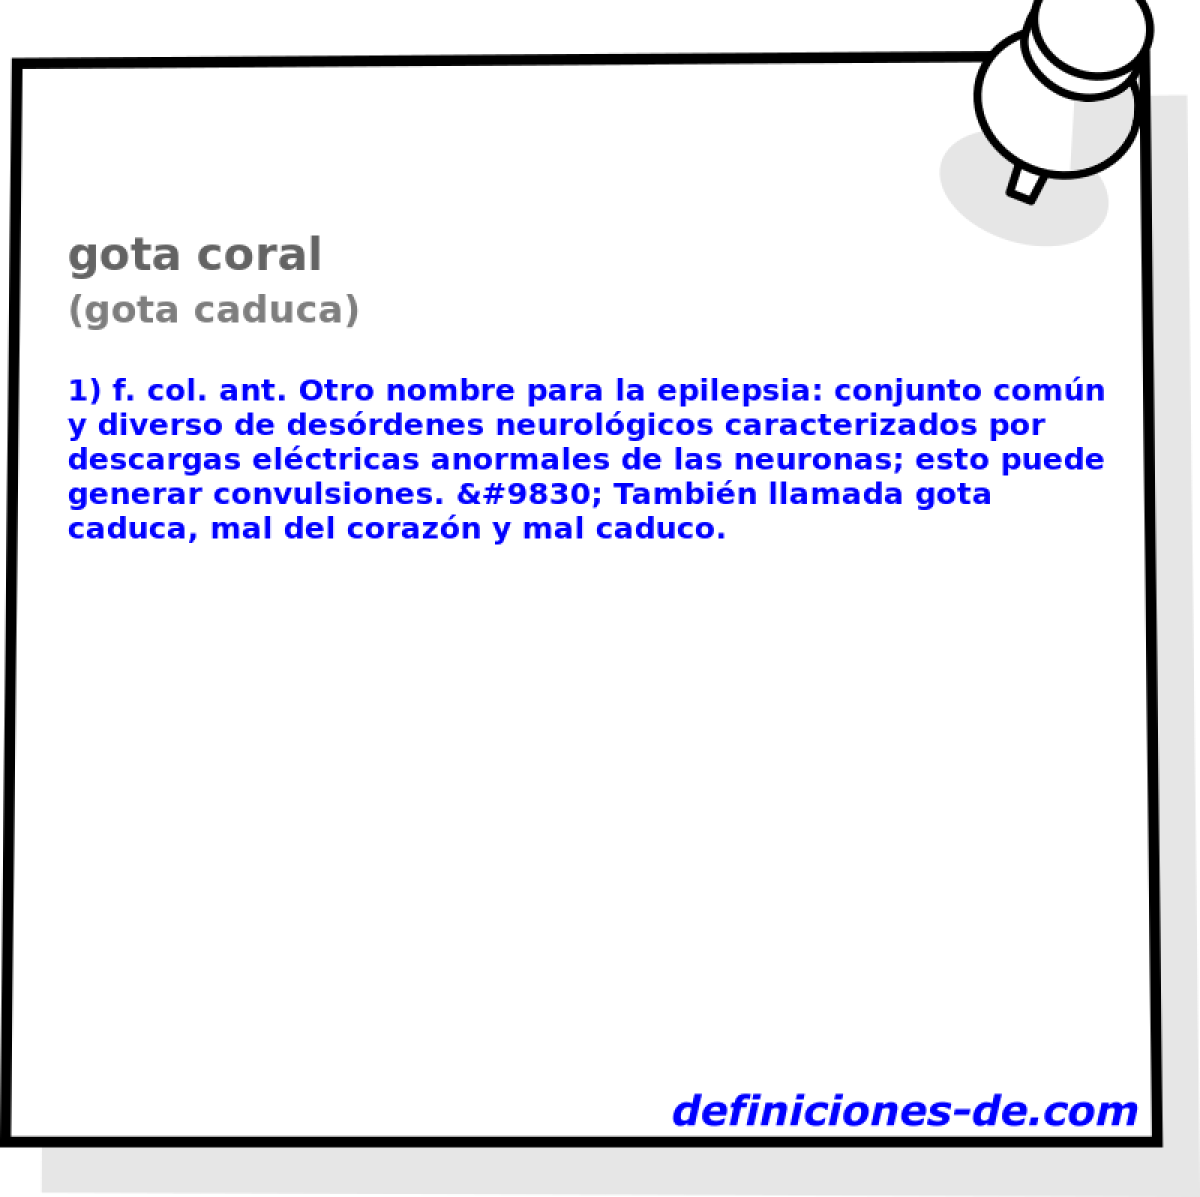 gota coral (gota caduca)